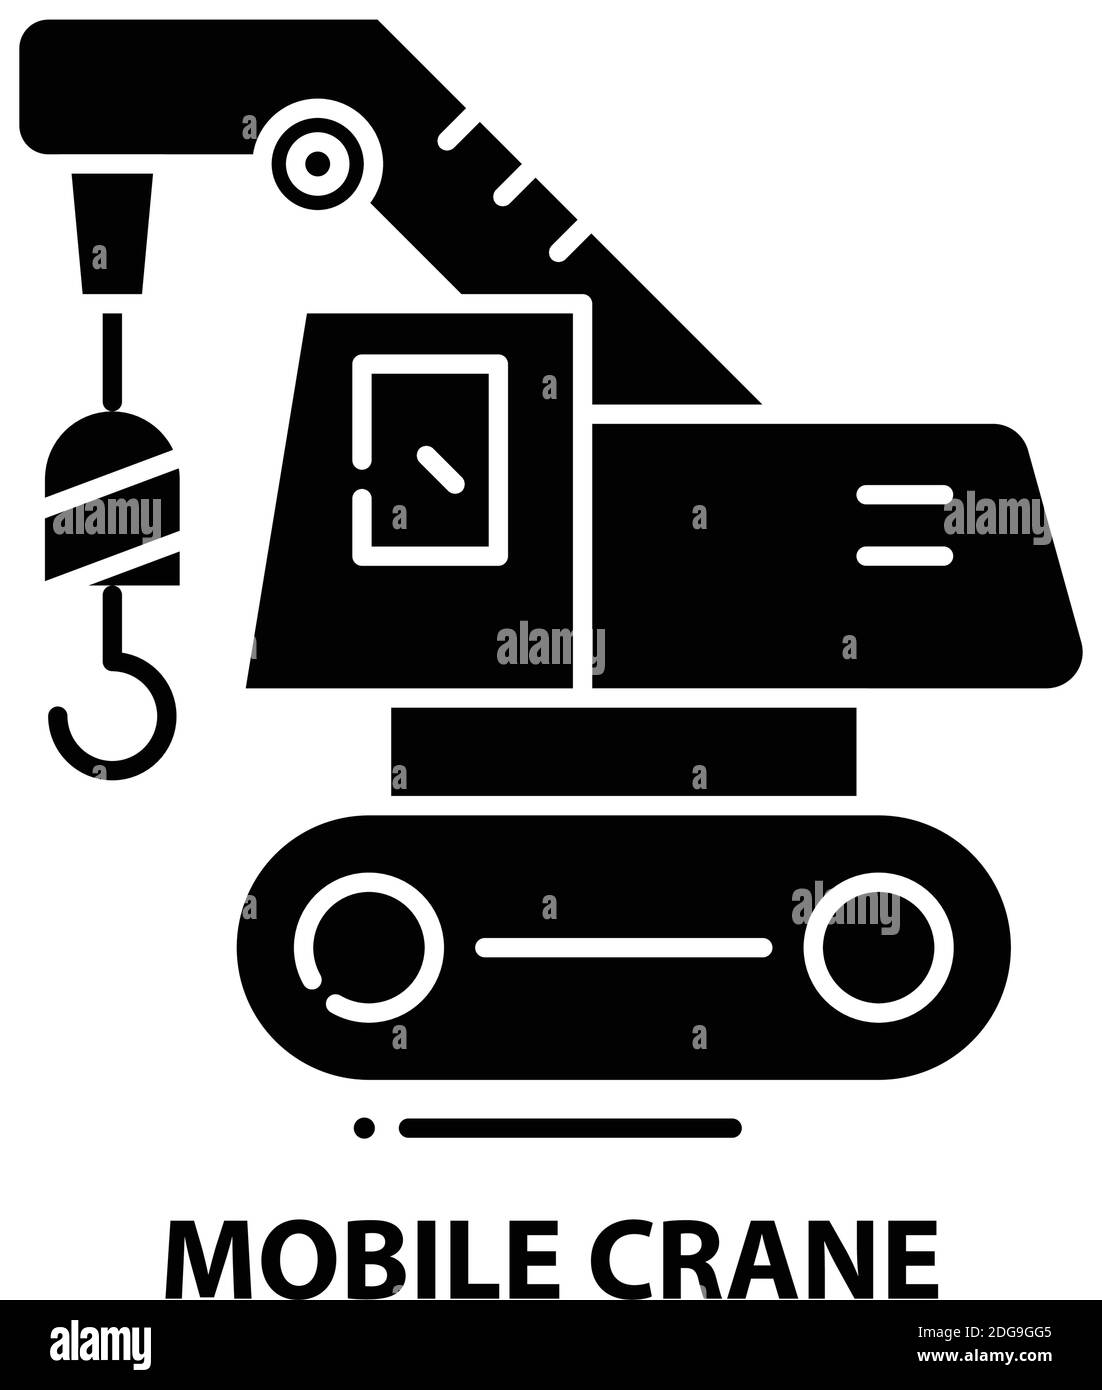 mobile crane icon, black vector sign with editable strokes, concept illustration Stock Vector